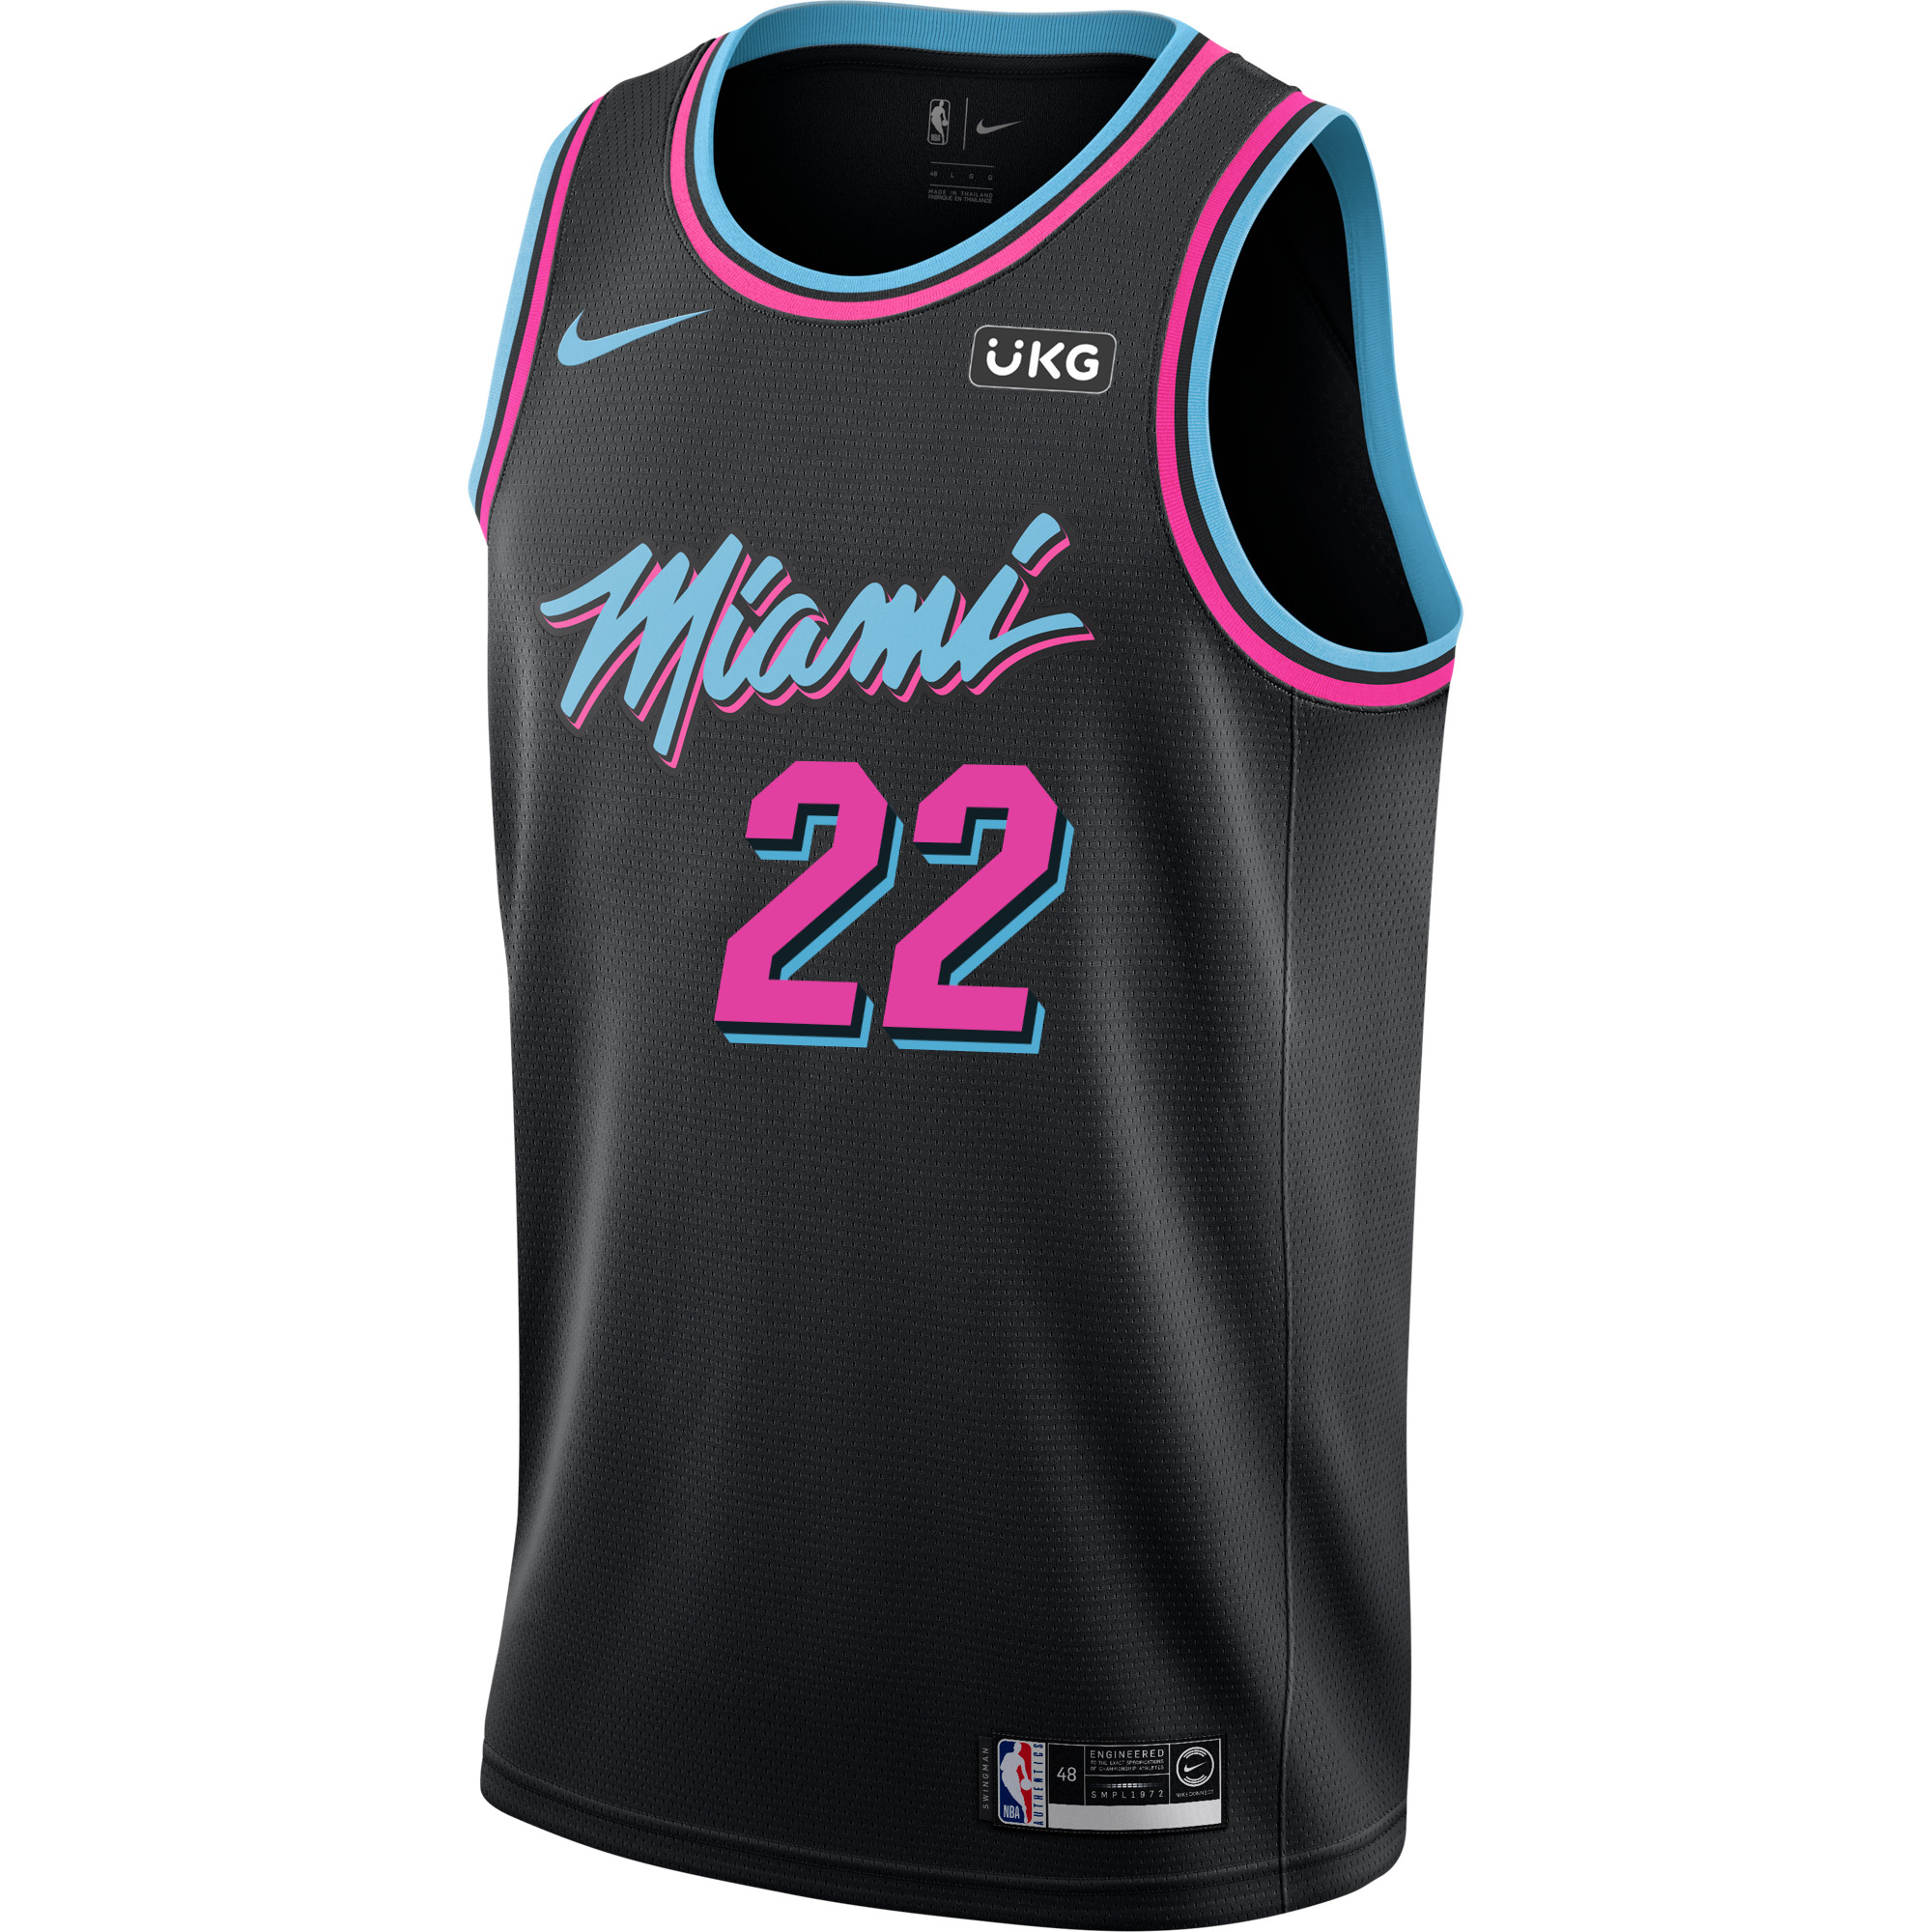 Miami Heat Vice jersey